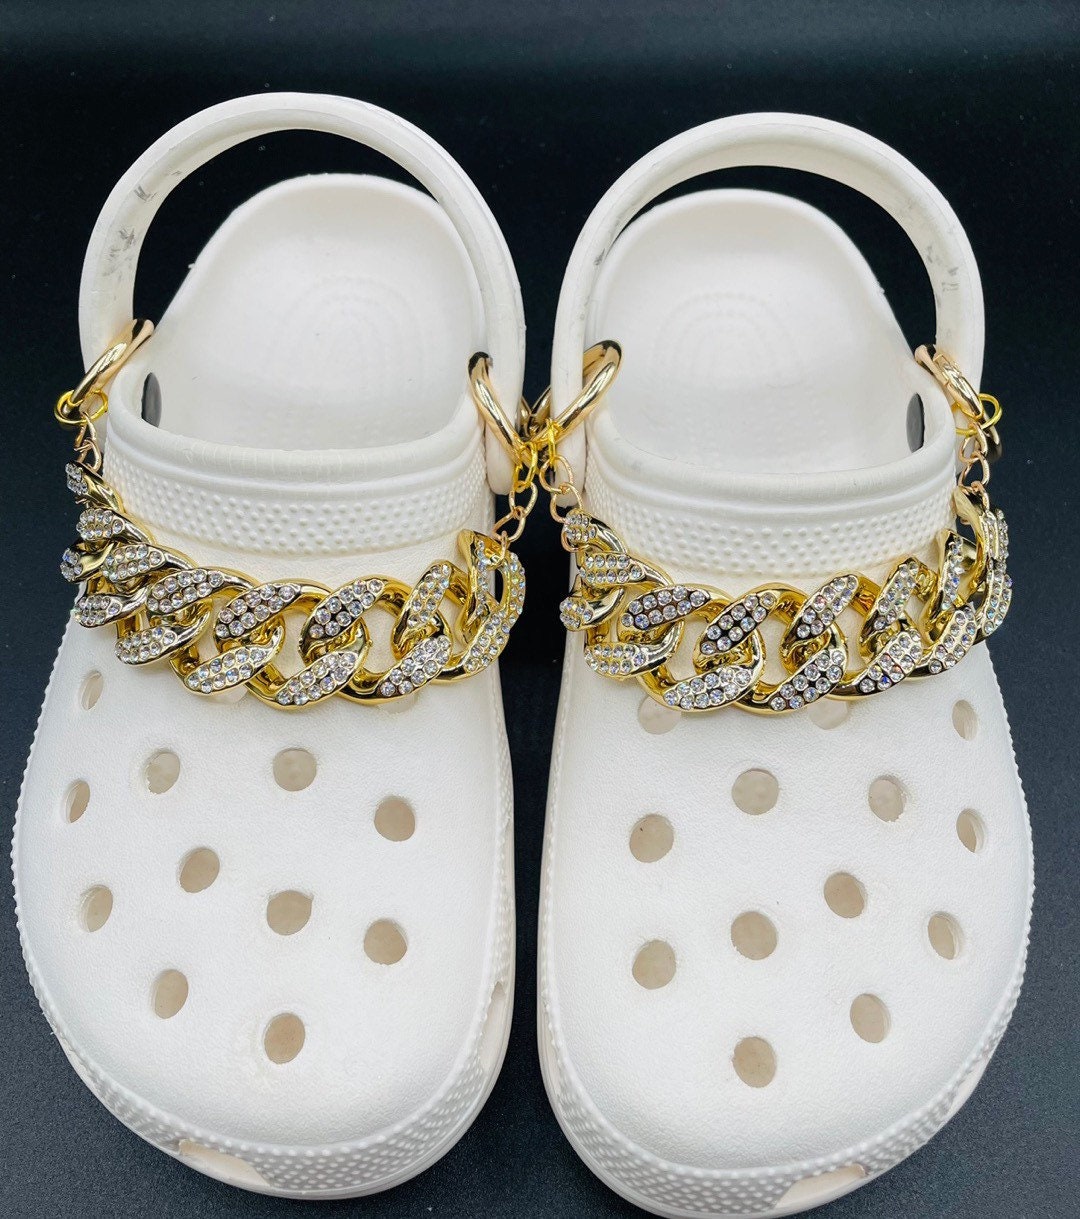 Fashion Chain Shoes Charms Designer Croc Charms Bling Rhinestone